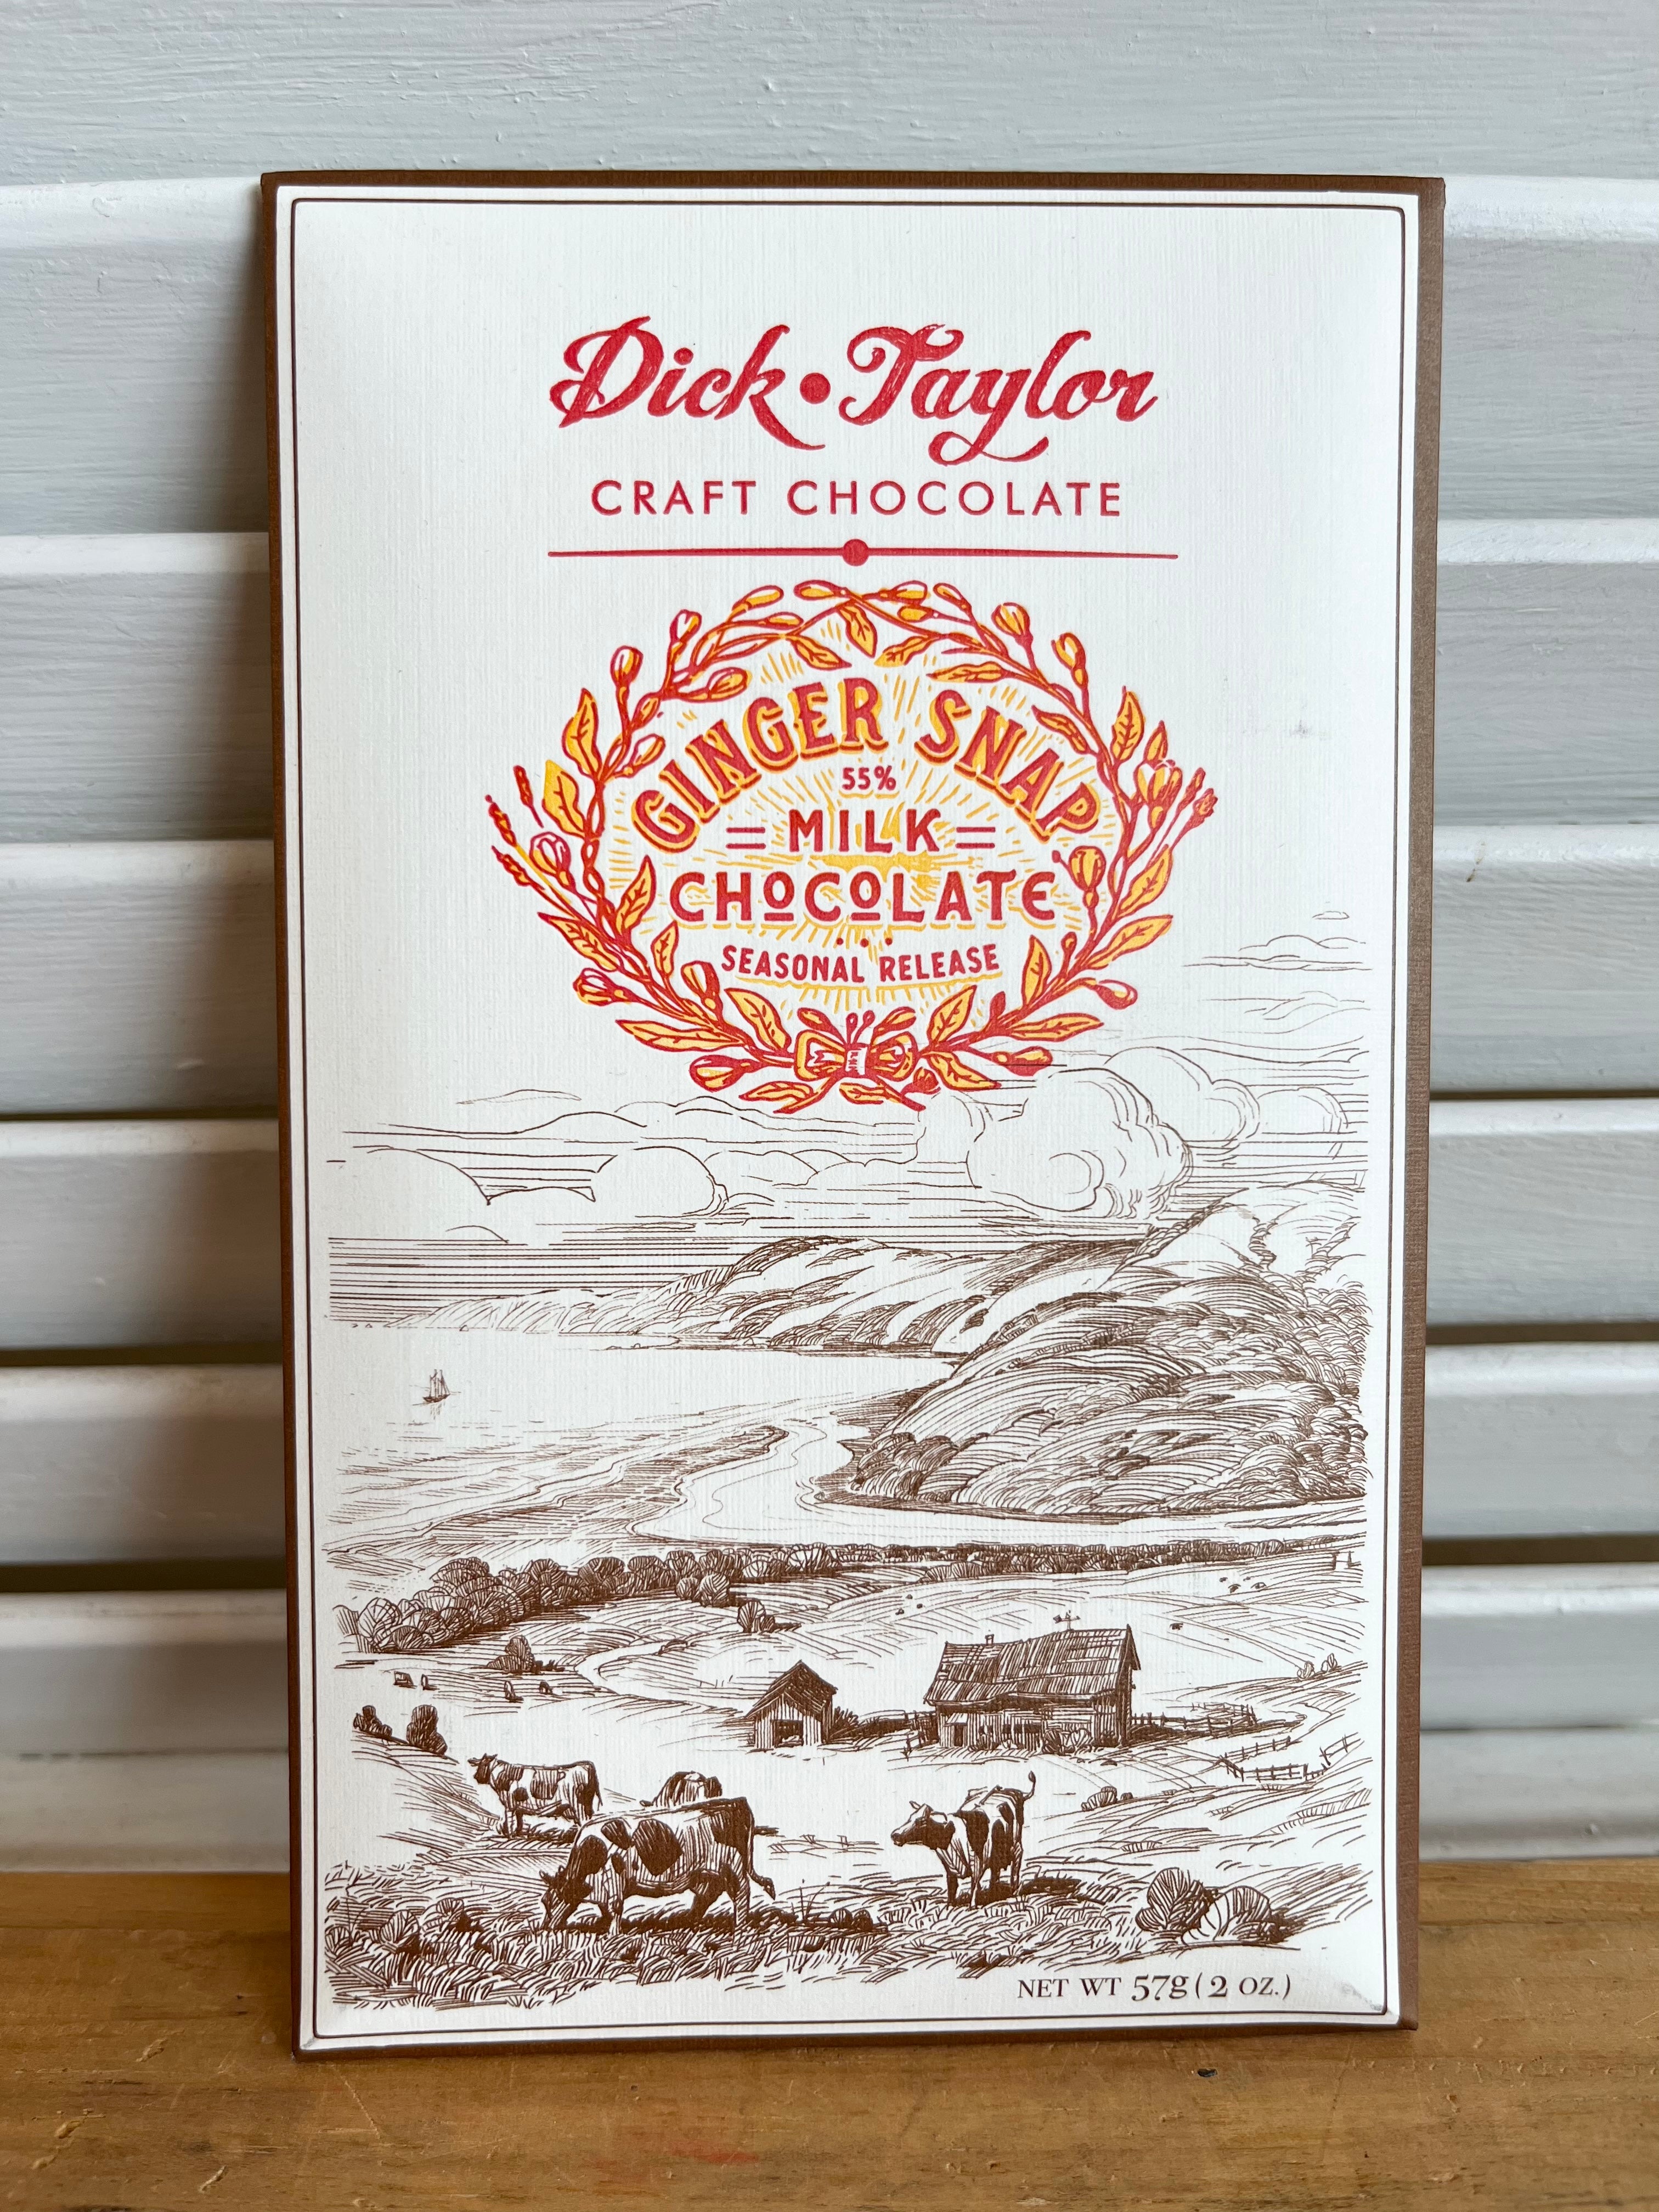 Seasonal Release chocolate bars from Dick Taylor Craft Chocolate